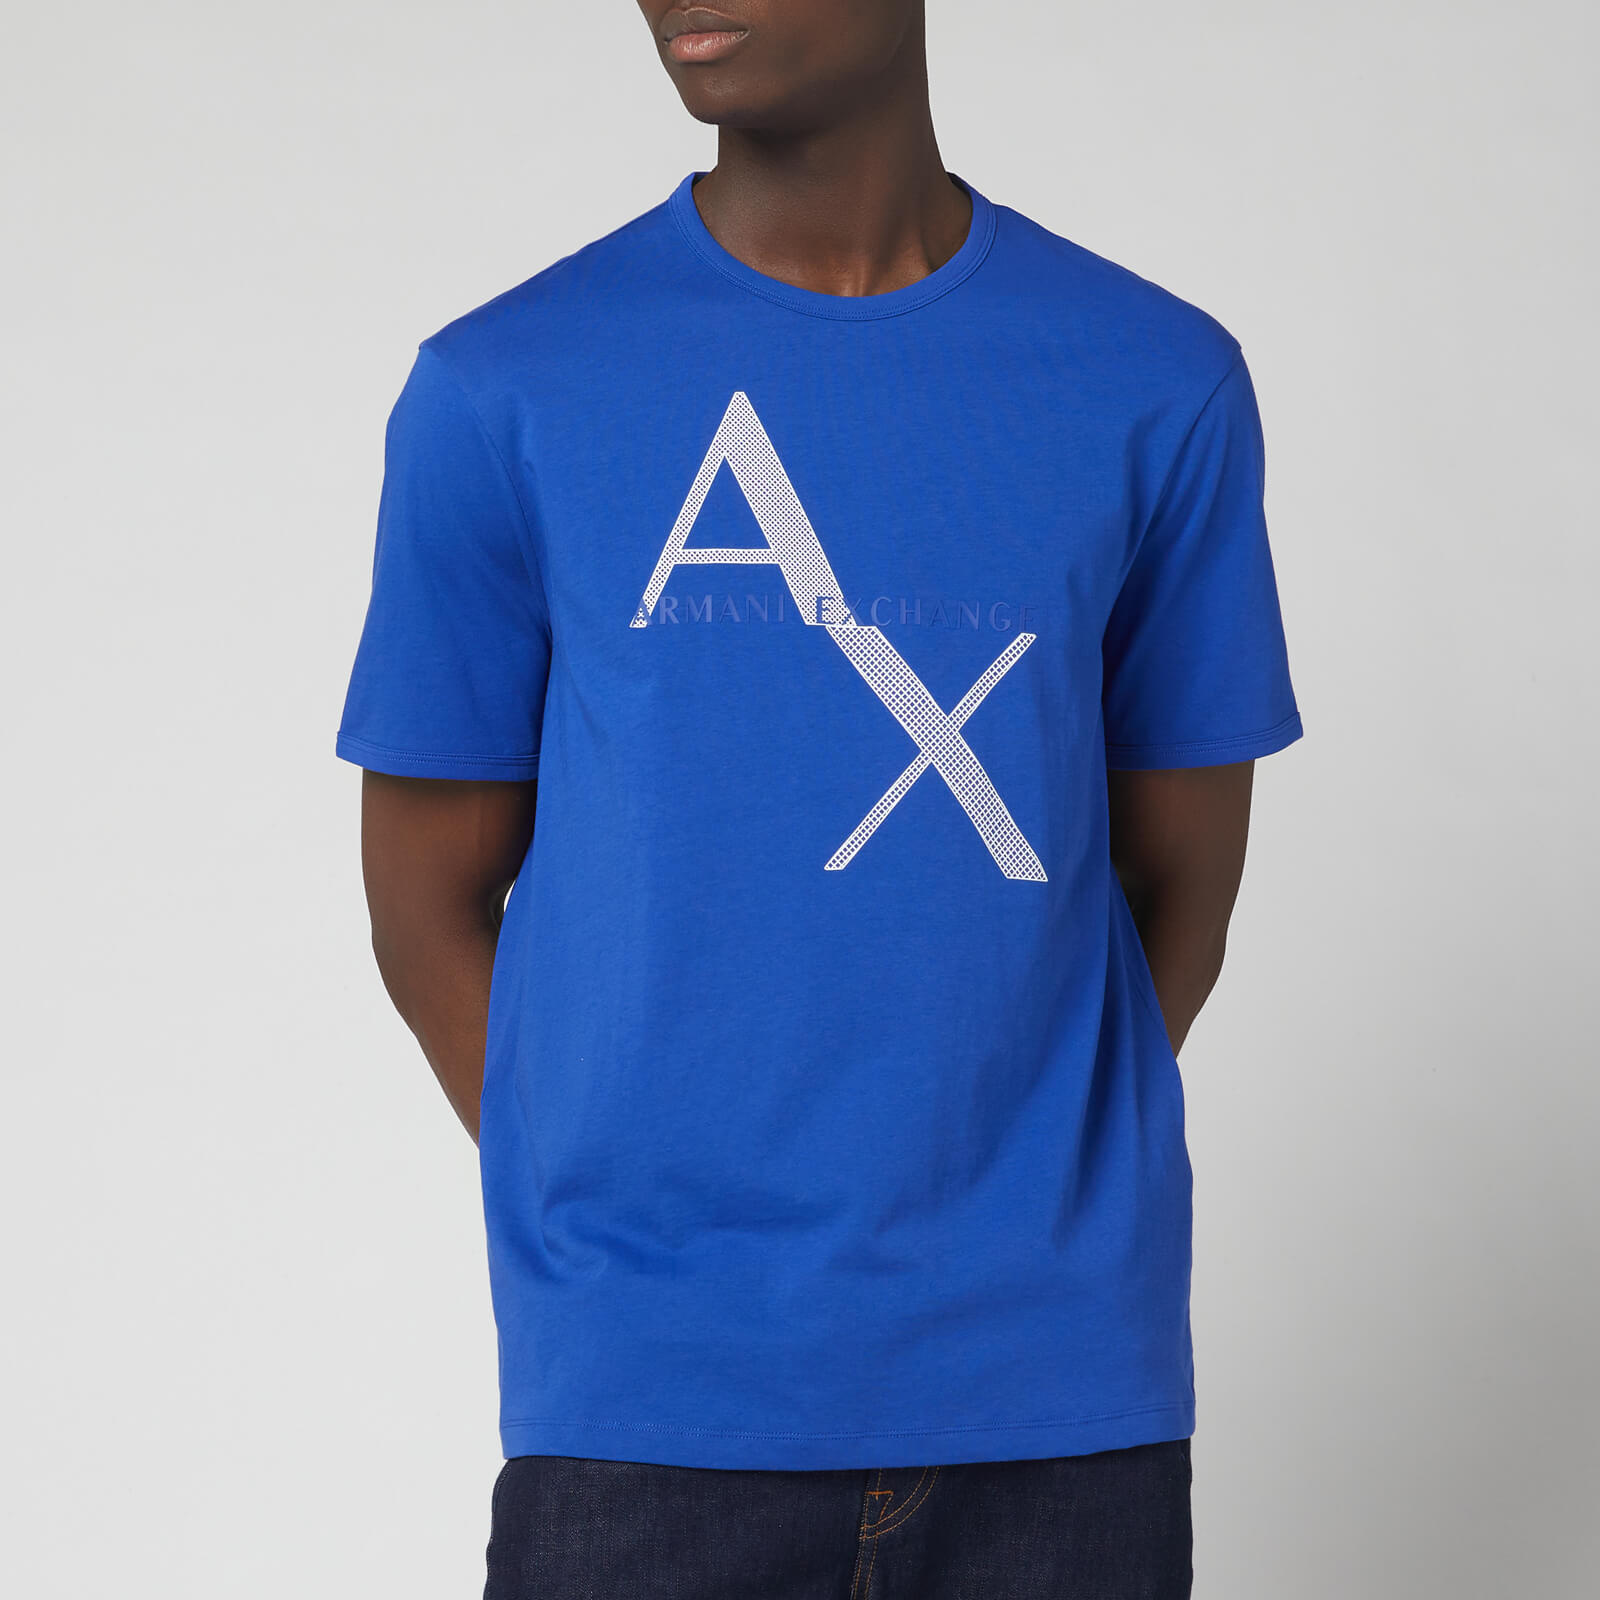 Armani Exchange Men's Large Ax Logo T-Shirt - Ultra Marine - S